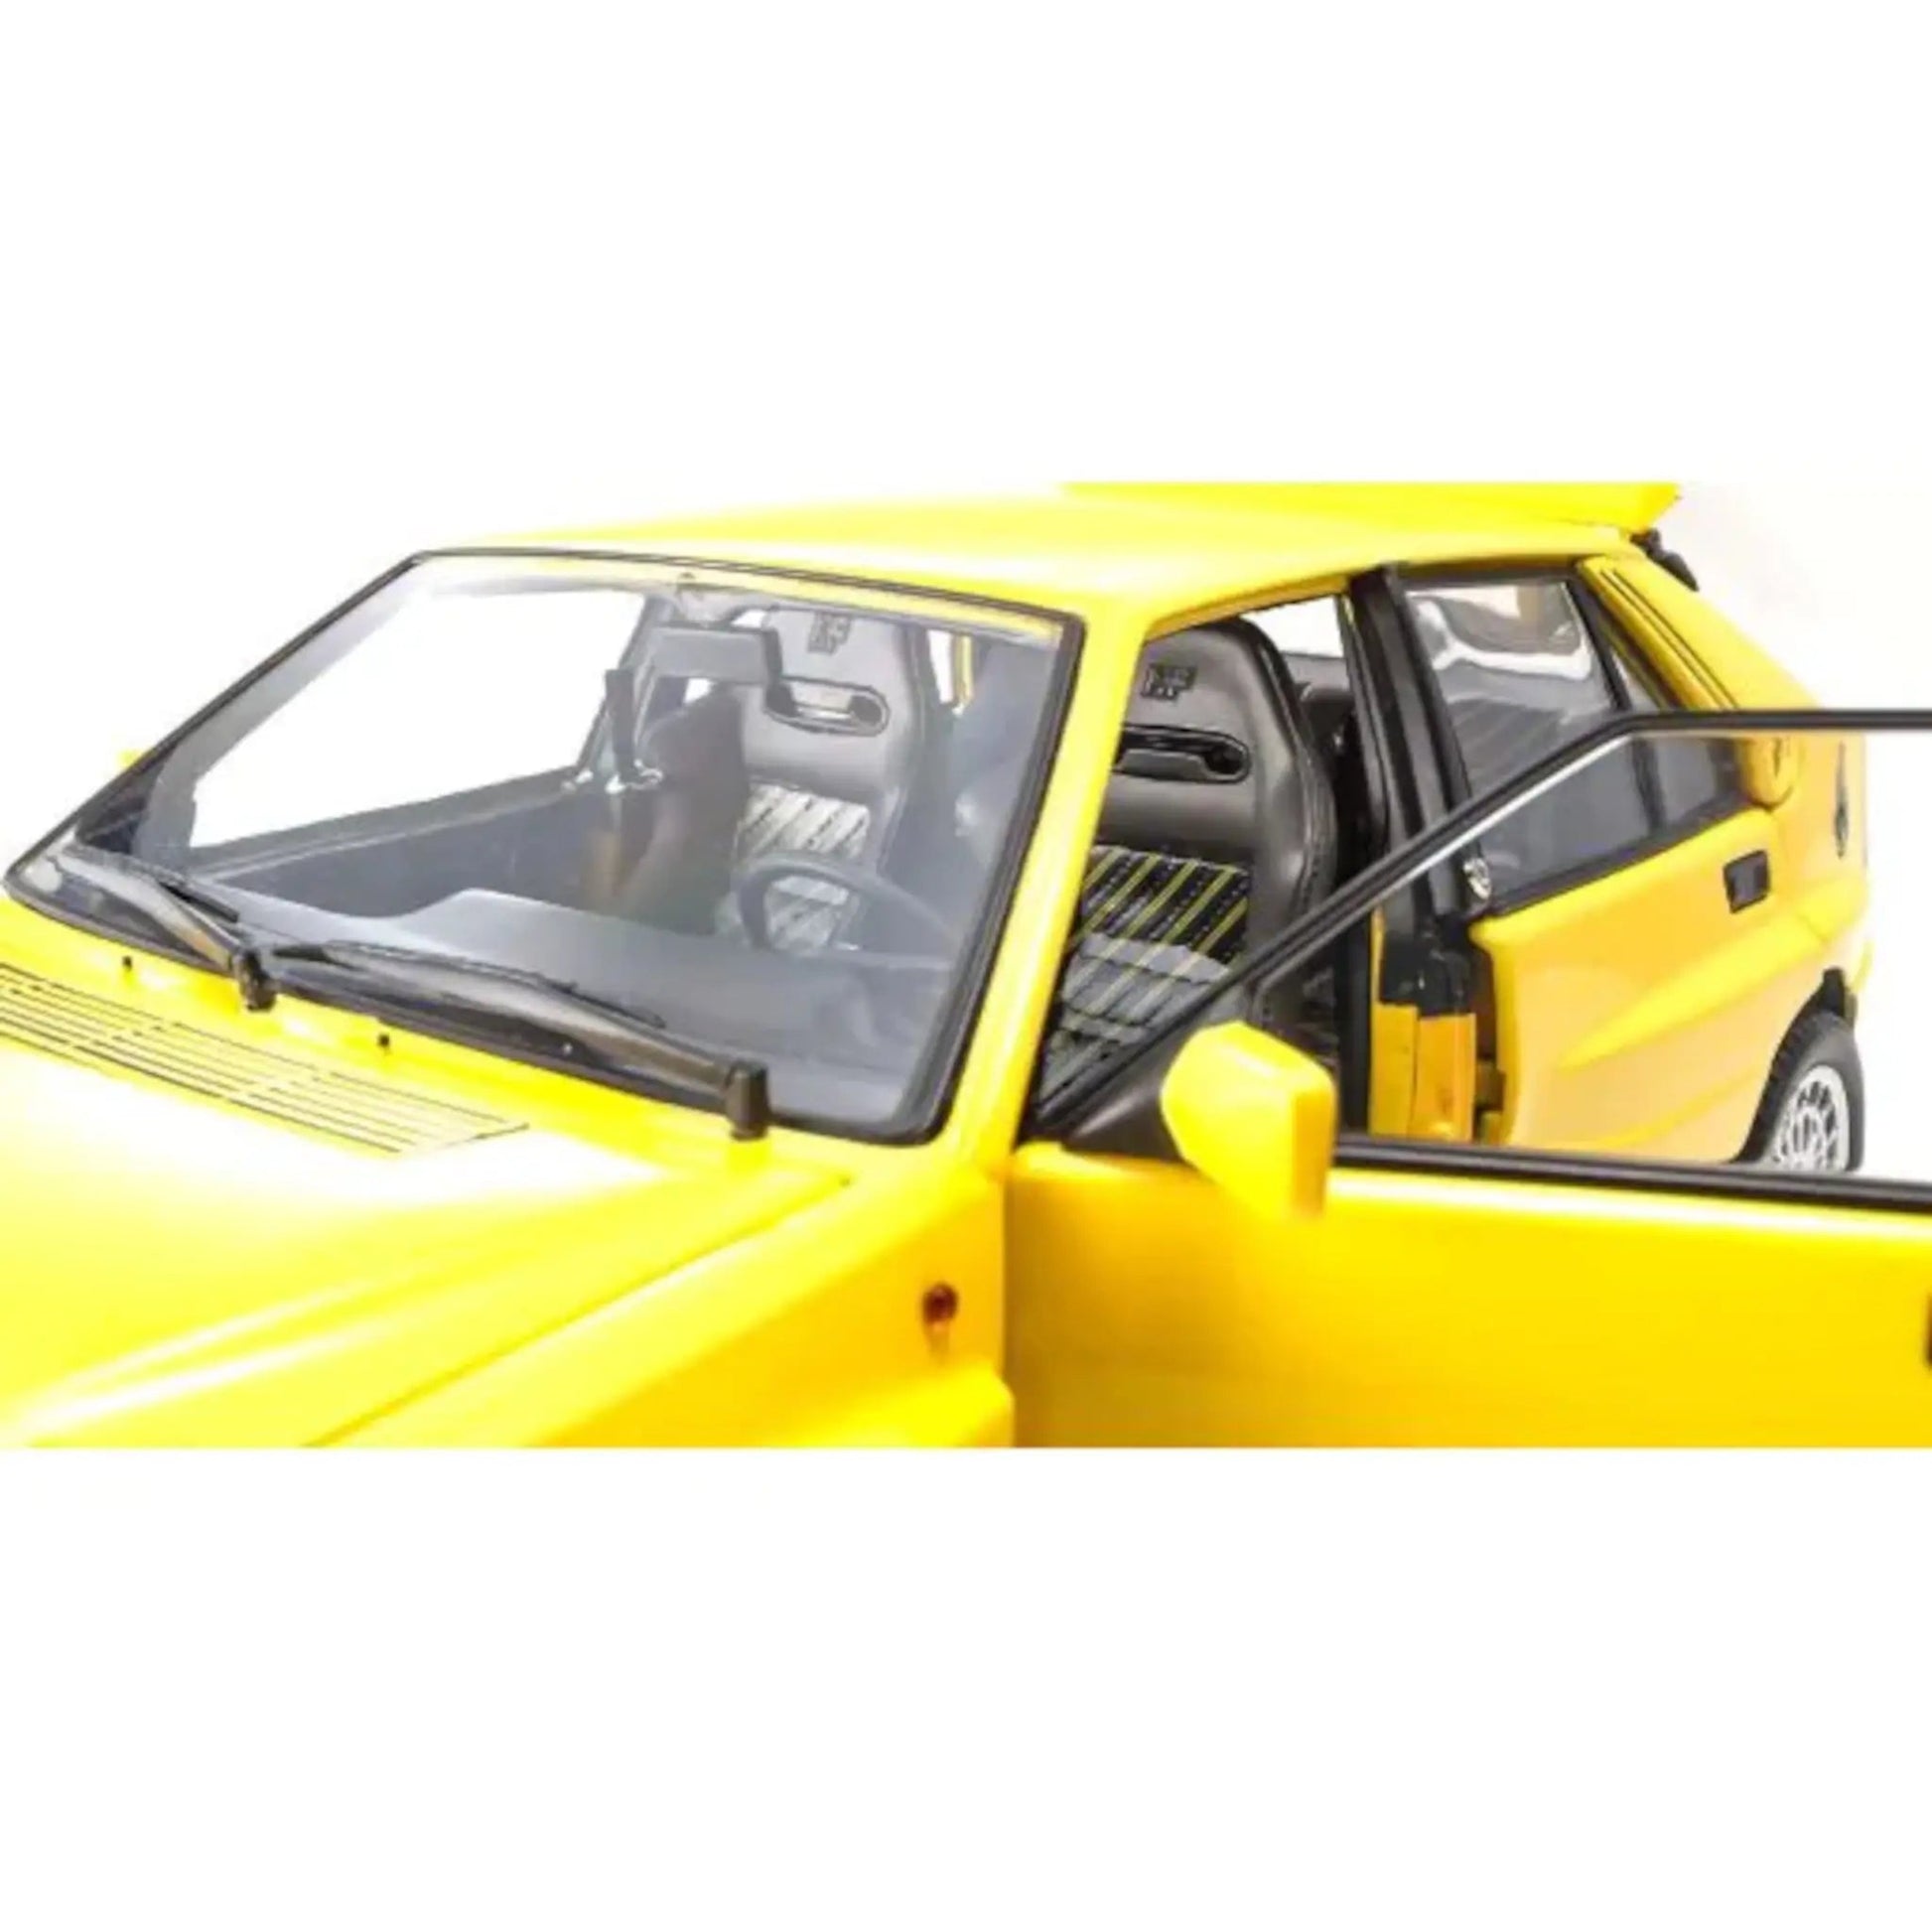 Lancia Delta HF Integrale jaune gialla Kyosho 1/18 - kyo8343y